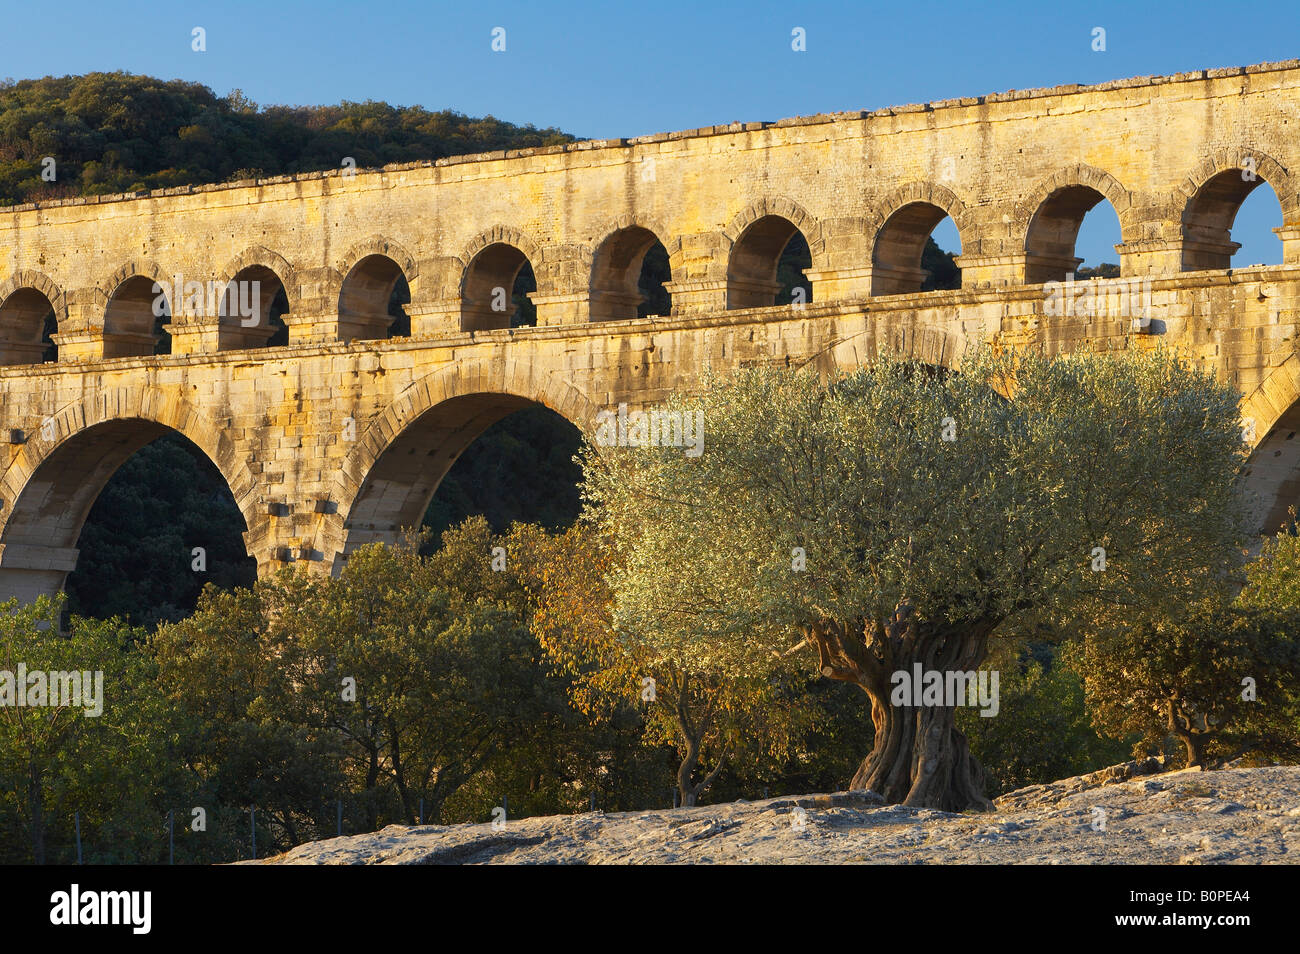 Albero di olivo dal Pont du Gard, Languedoc, Francia Foto Stock